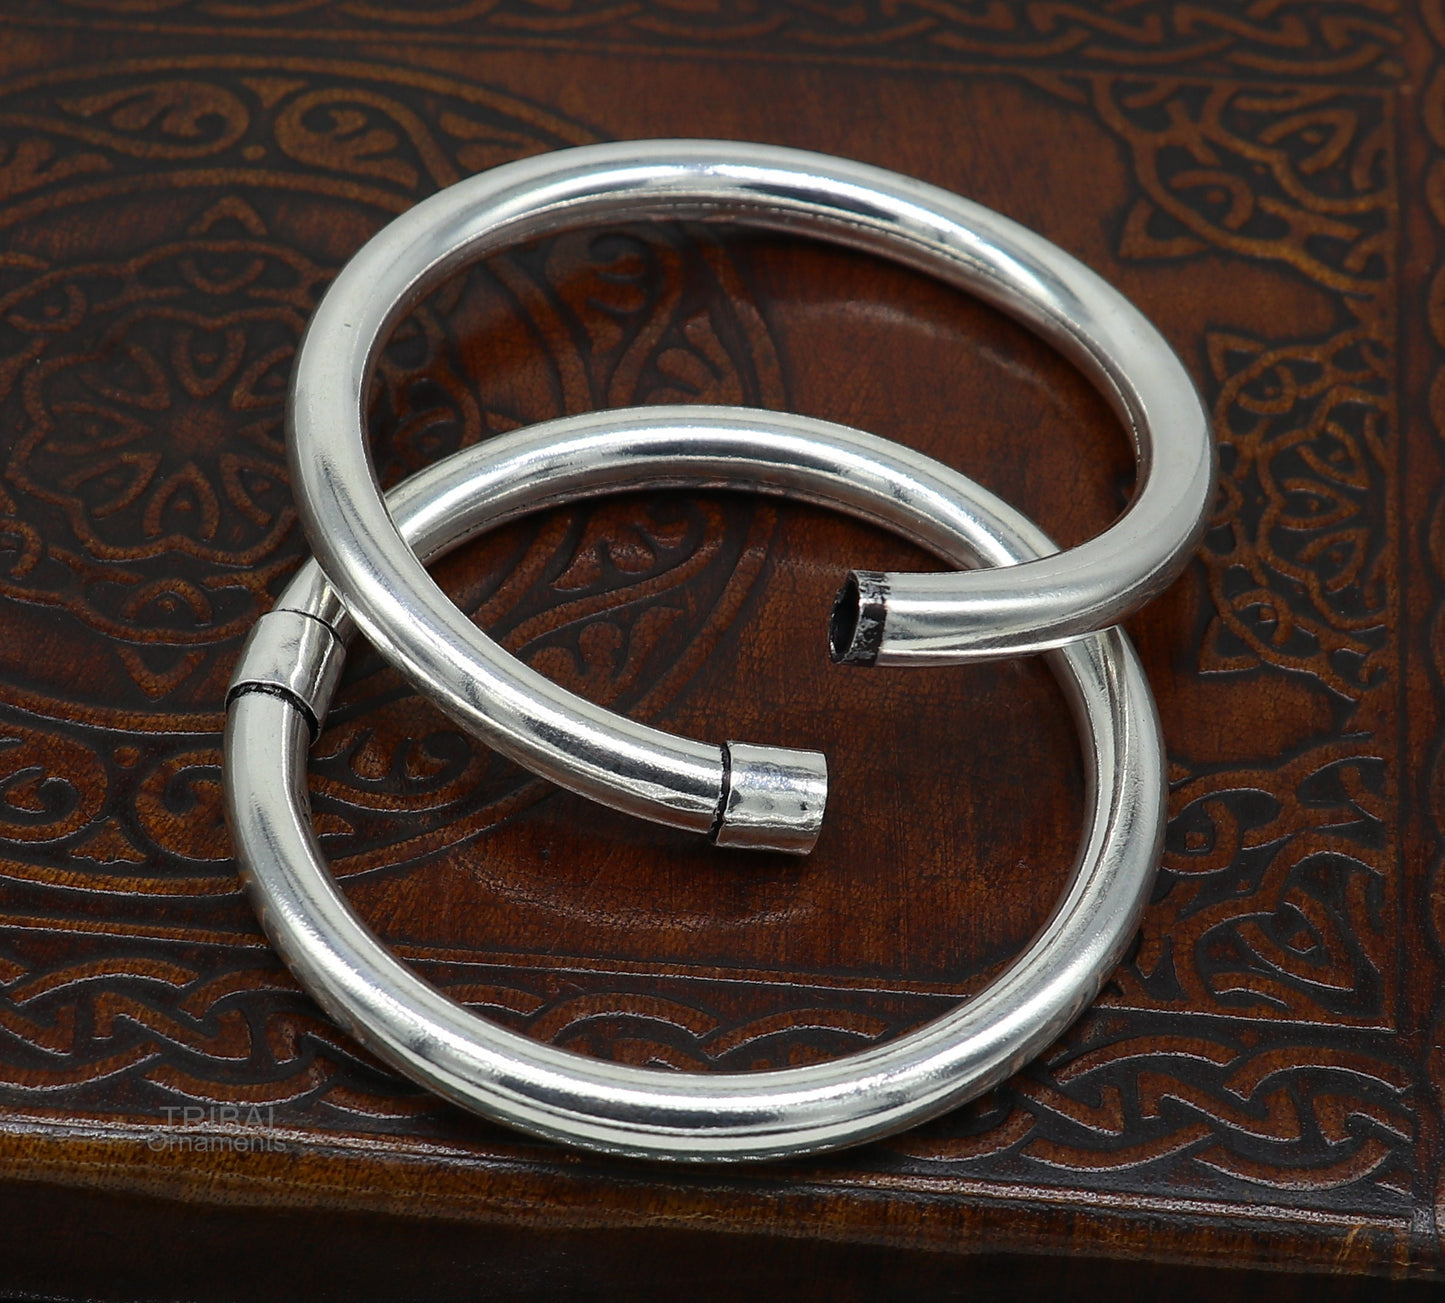 925 sterling silver plain shiny bright bangle bracelet kada, excellent personalized gifting stylish fancy bangle men's or girls ba136 - TRIBAL ORNAMENTS